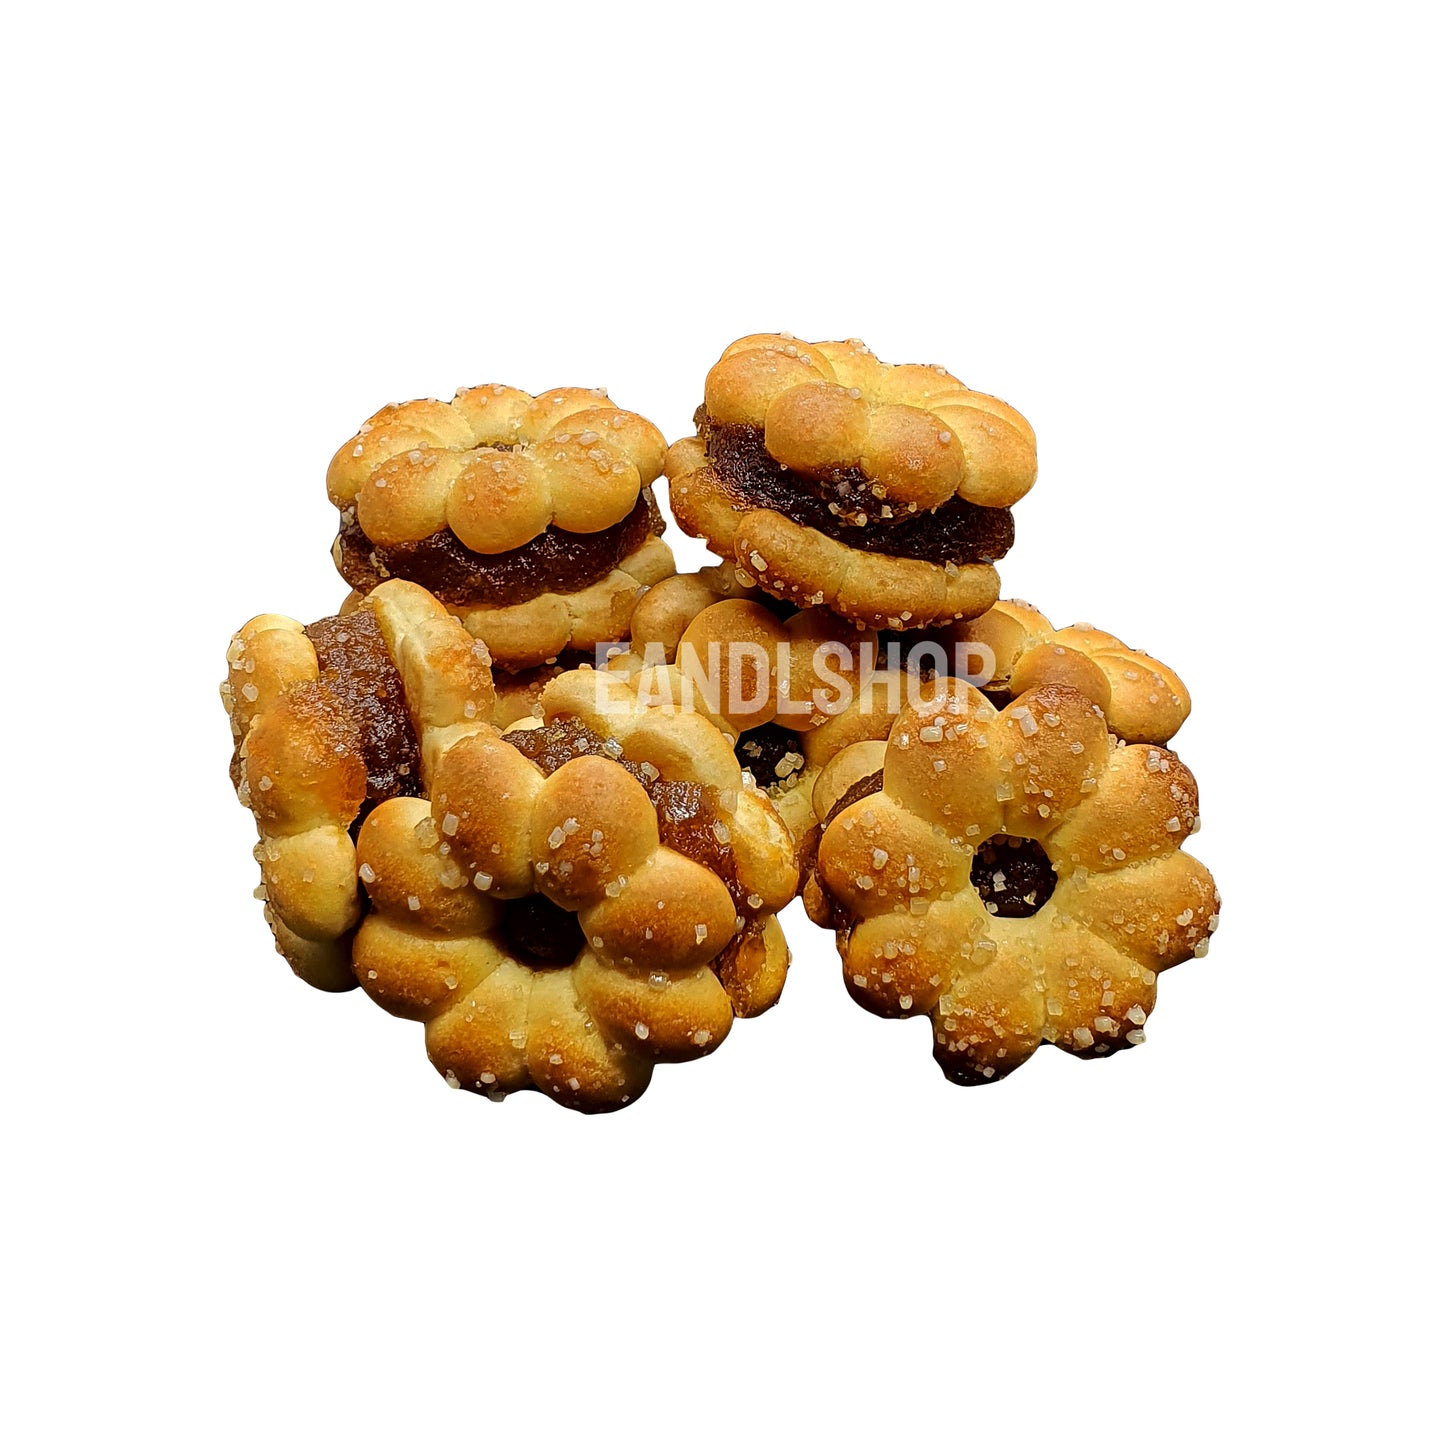 Sakura Pineapple biscuits. Old-school biscuits, modern snacks (chips, crackers), cakes, gummies, plums, dried fruits, nuts, herbal tea – available at www.EANDLSHOP.com